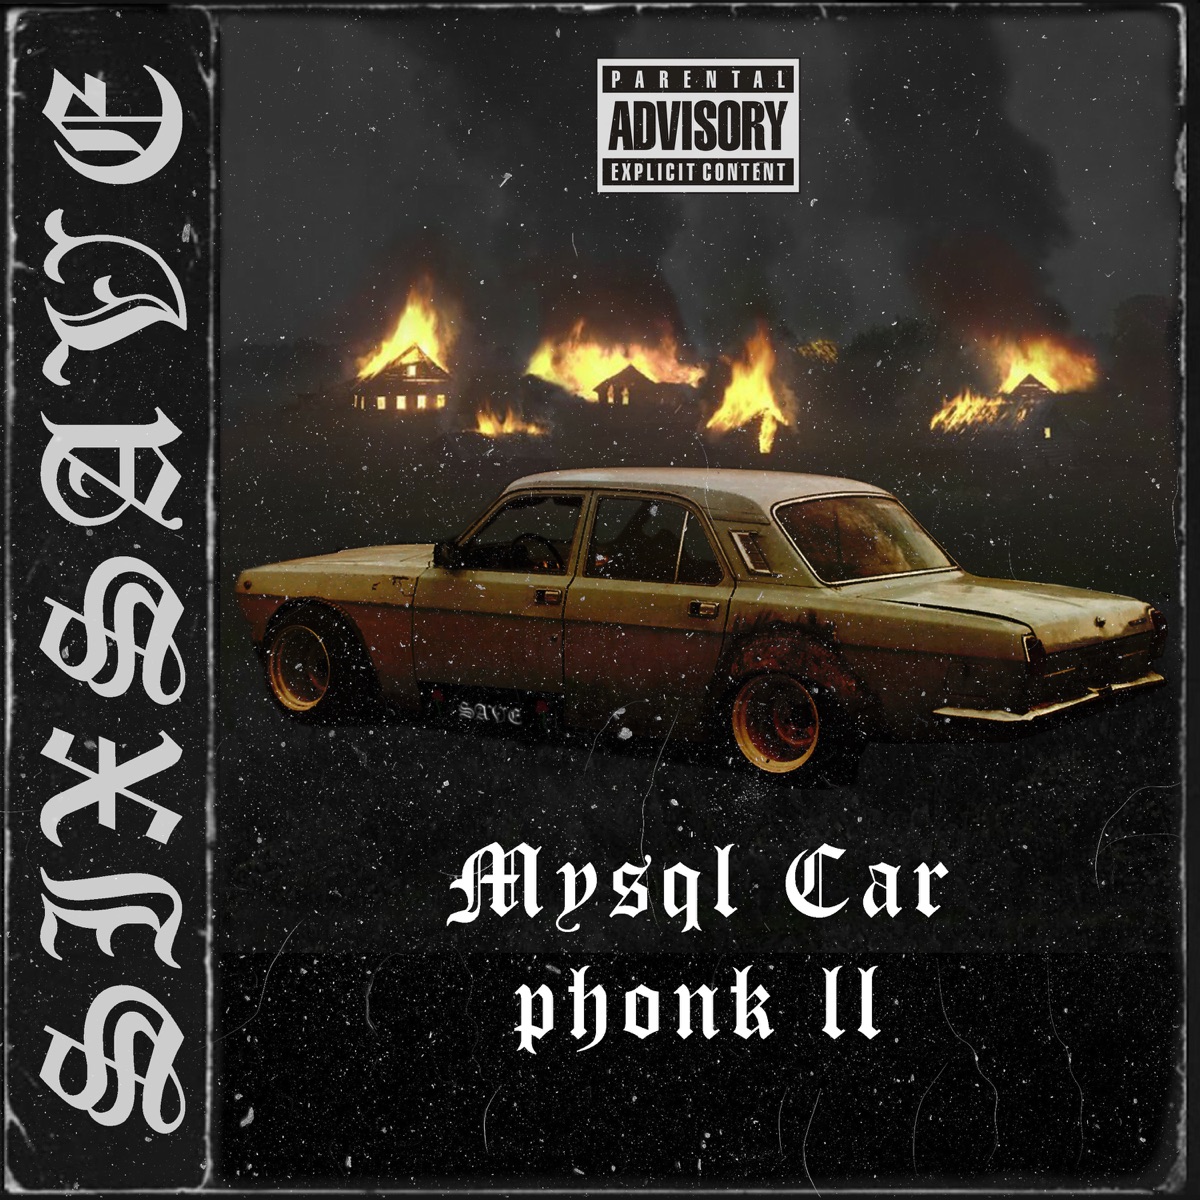 Mysql Car Phonk 2 - Single by $IX$AVE on Apple Music